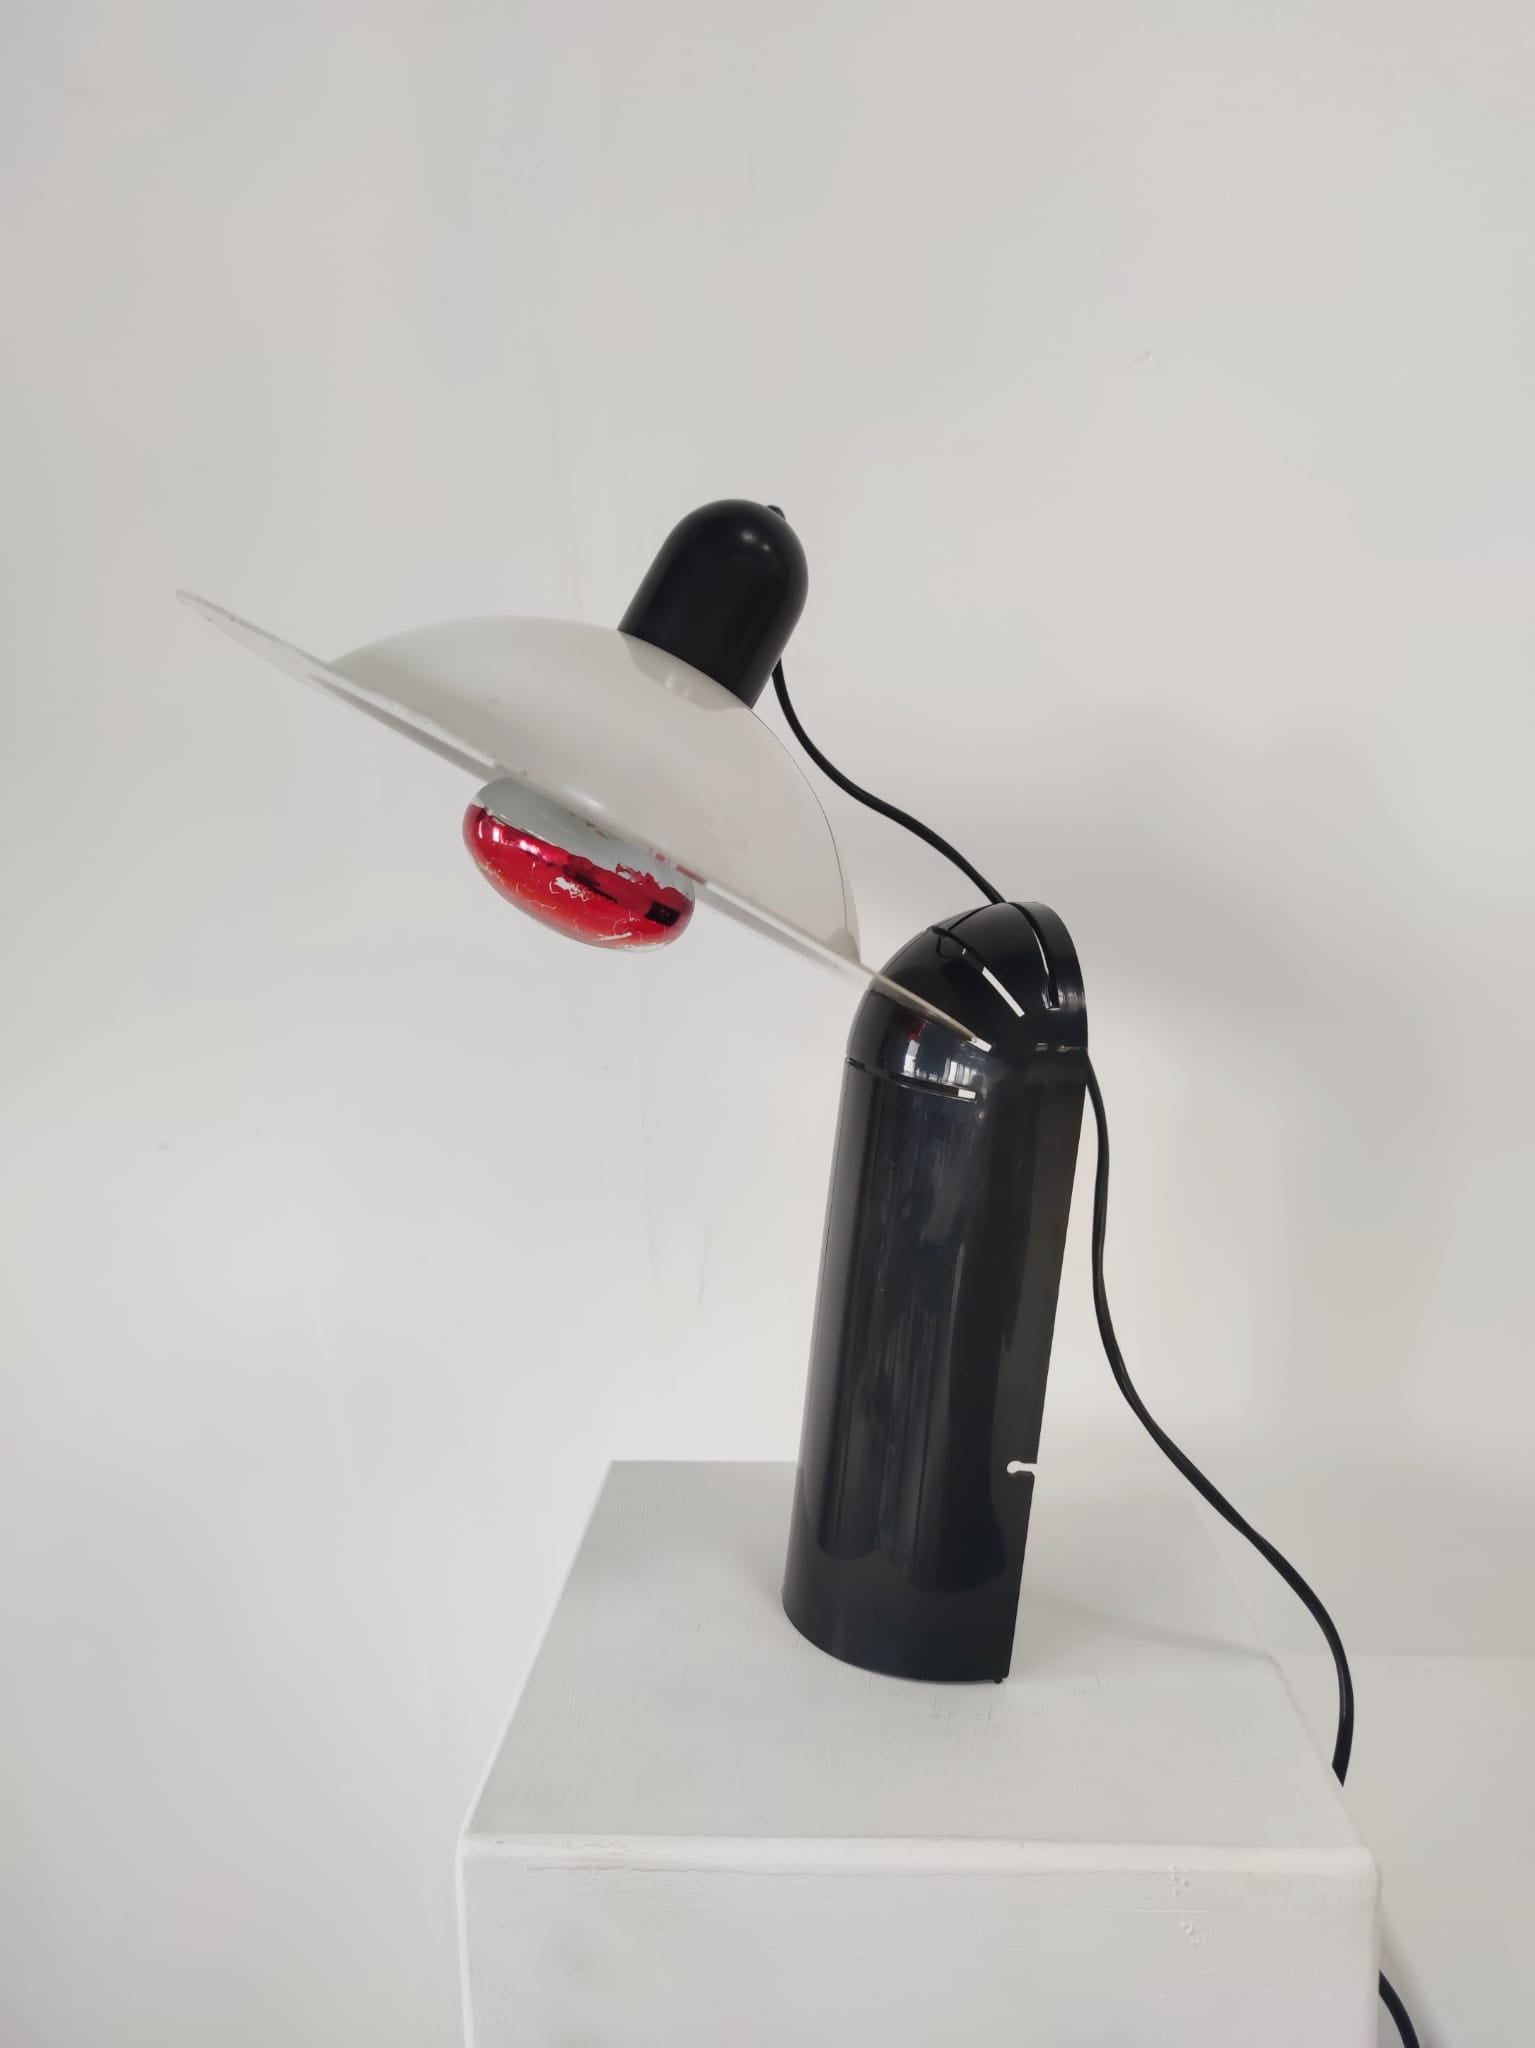 Lampiatta lampe à poser ou applique Stilnovo designée par De Pas et D'Urbino